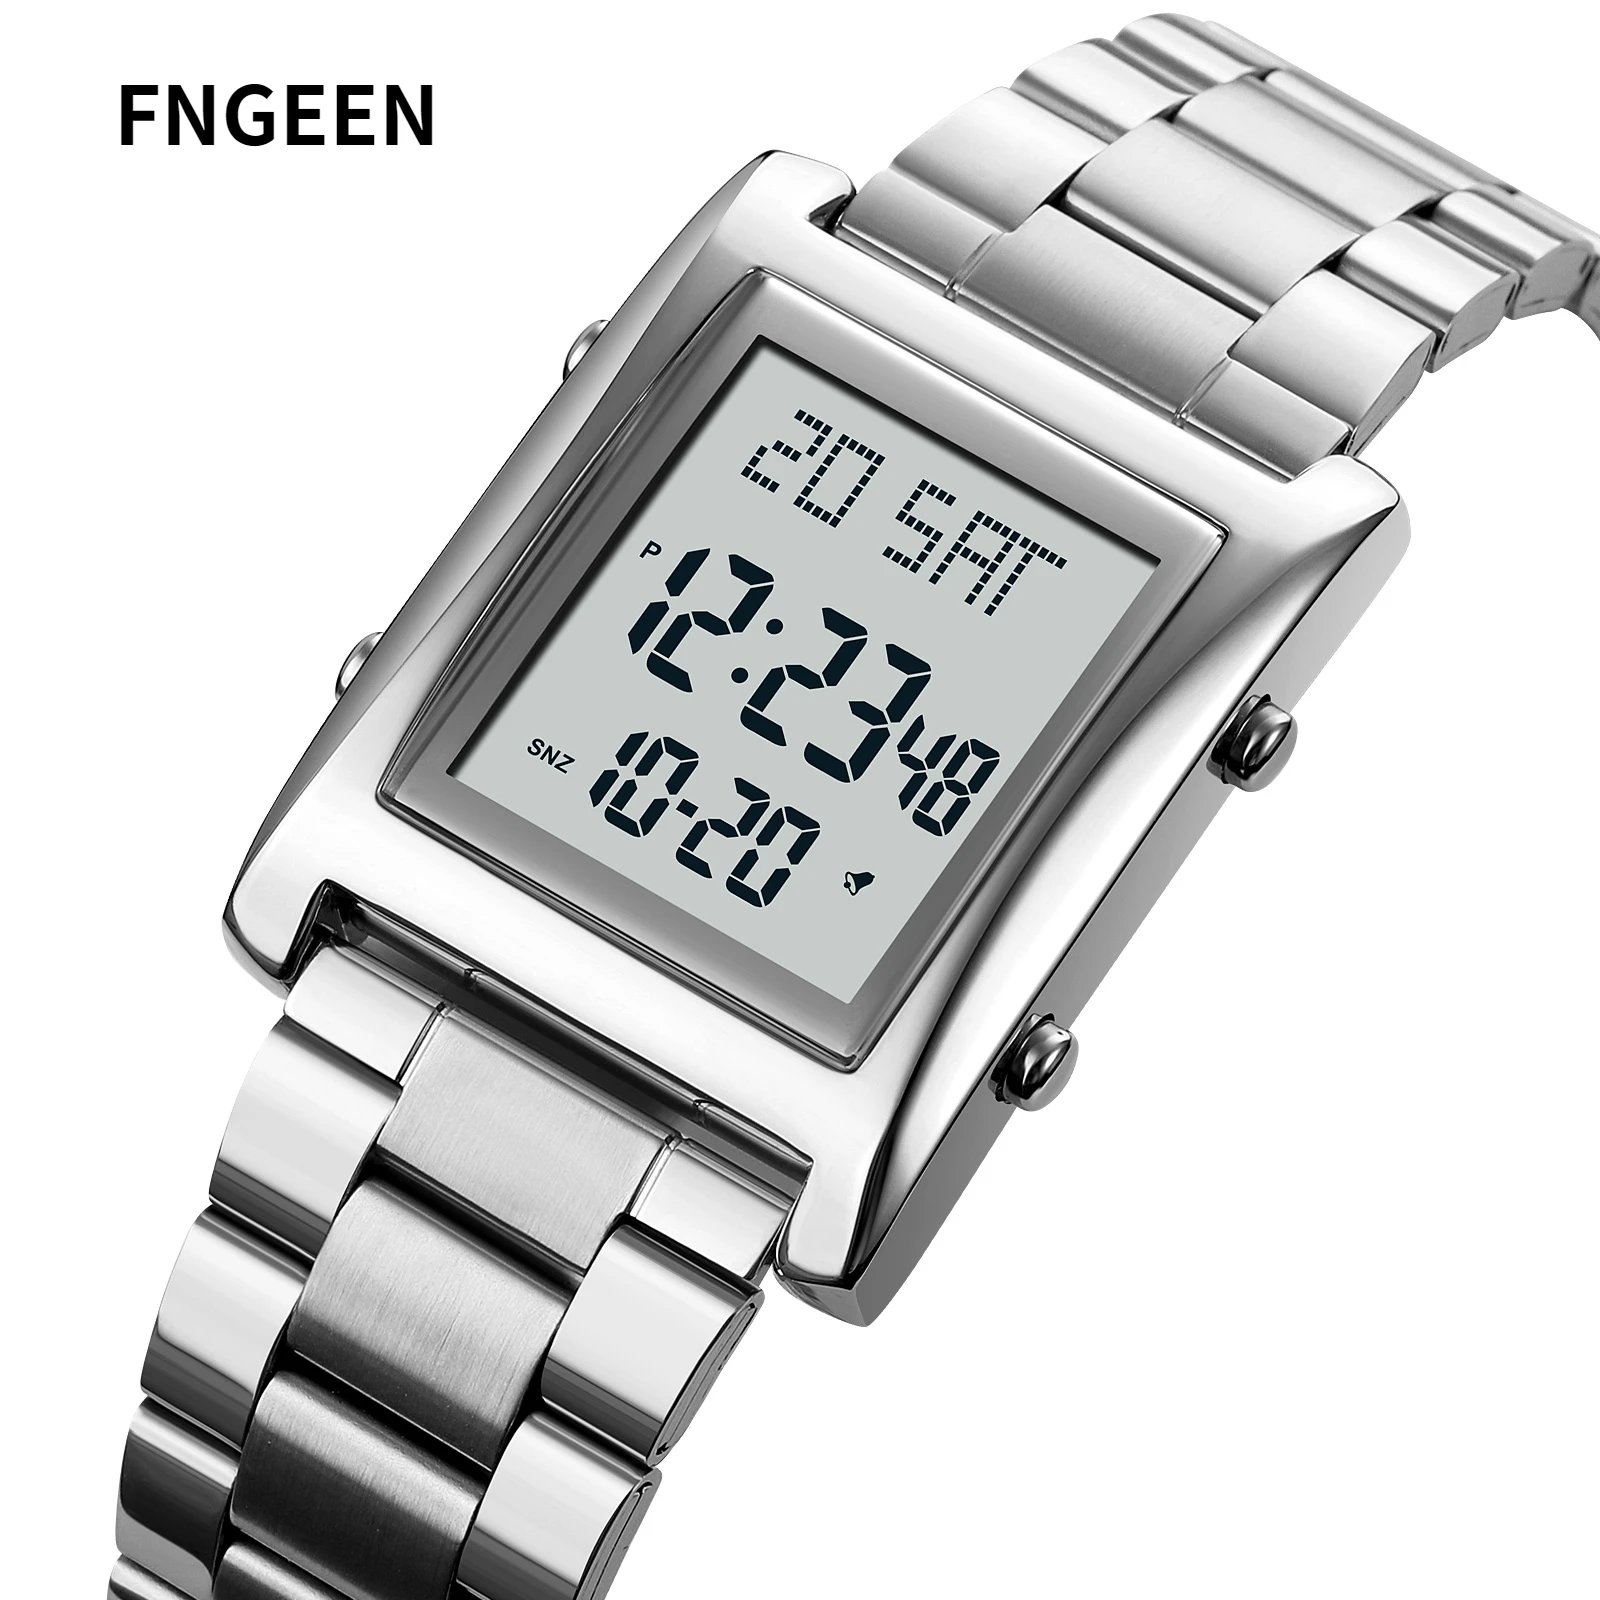 2021 New Fashion Mens Digital Watches Luminous Waterproof Male Clock Electronic Wristwatch Relogio Masculino Montre Homme Alarm digital wrist watch for men